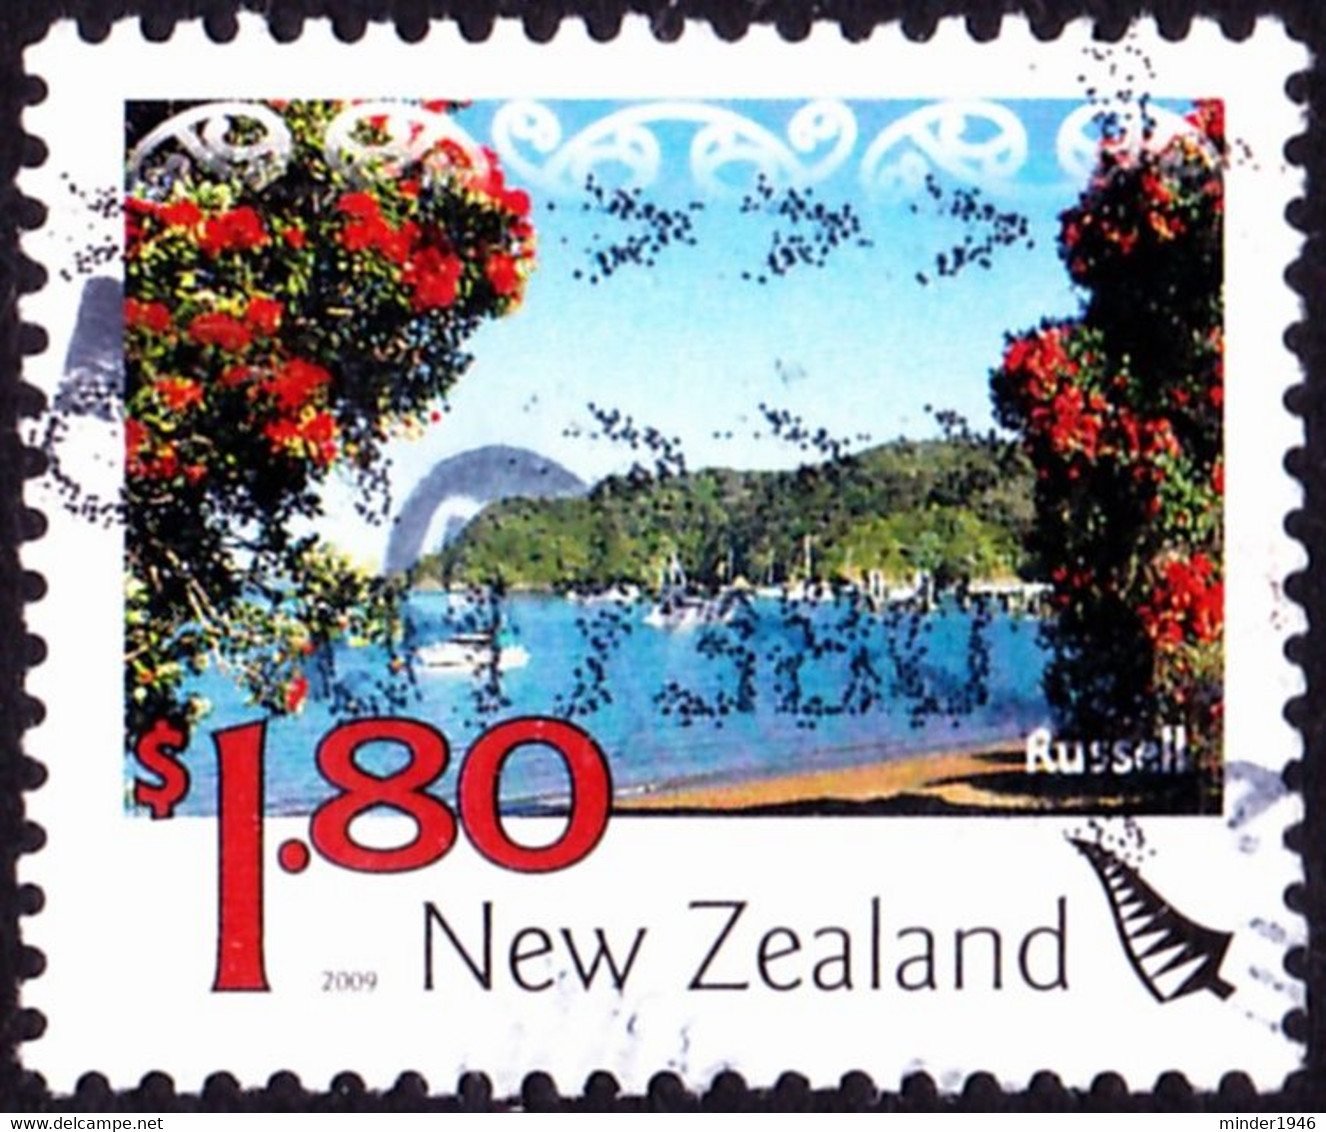 NEW ZEALAND 2009 QEII $1.80 Multicoloured, Scenic-Russel SG3156 FU - Gebruikt